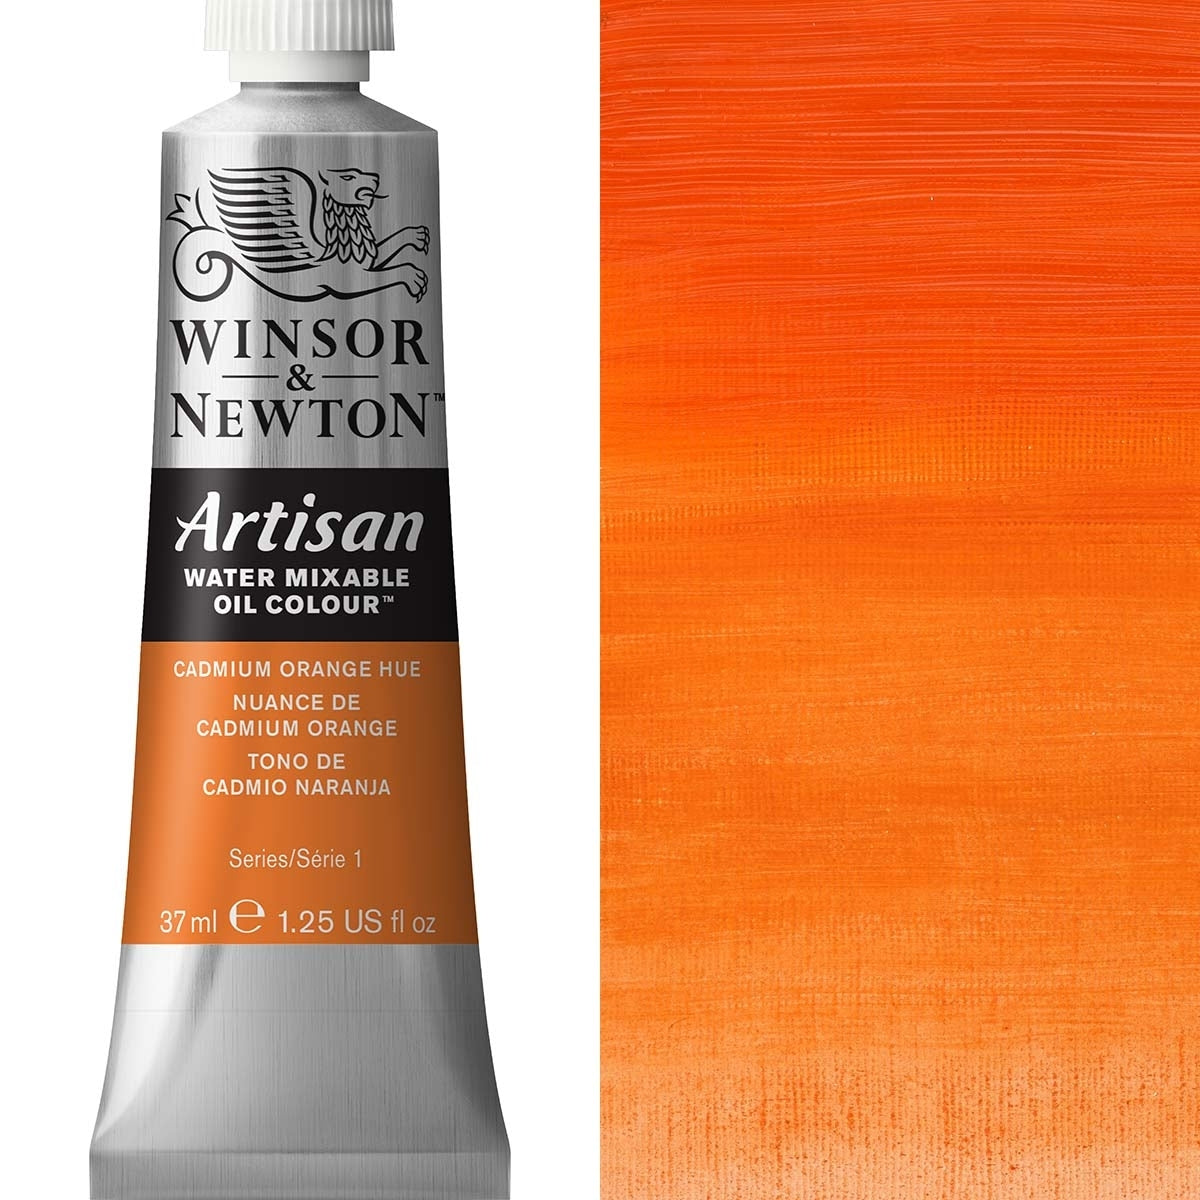 Winsor and Newton - Artisan Oil Colour Watermixable - 37ml - Cadmium Orange Hue